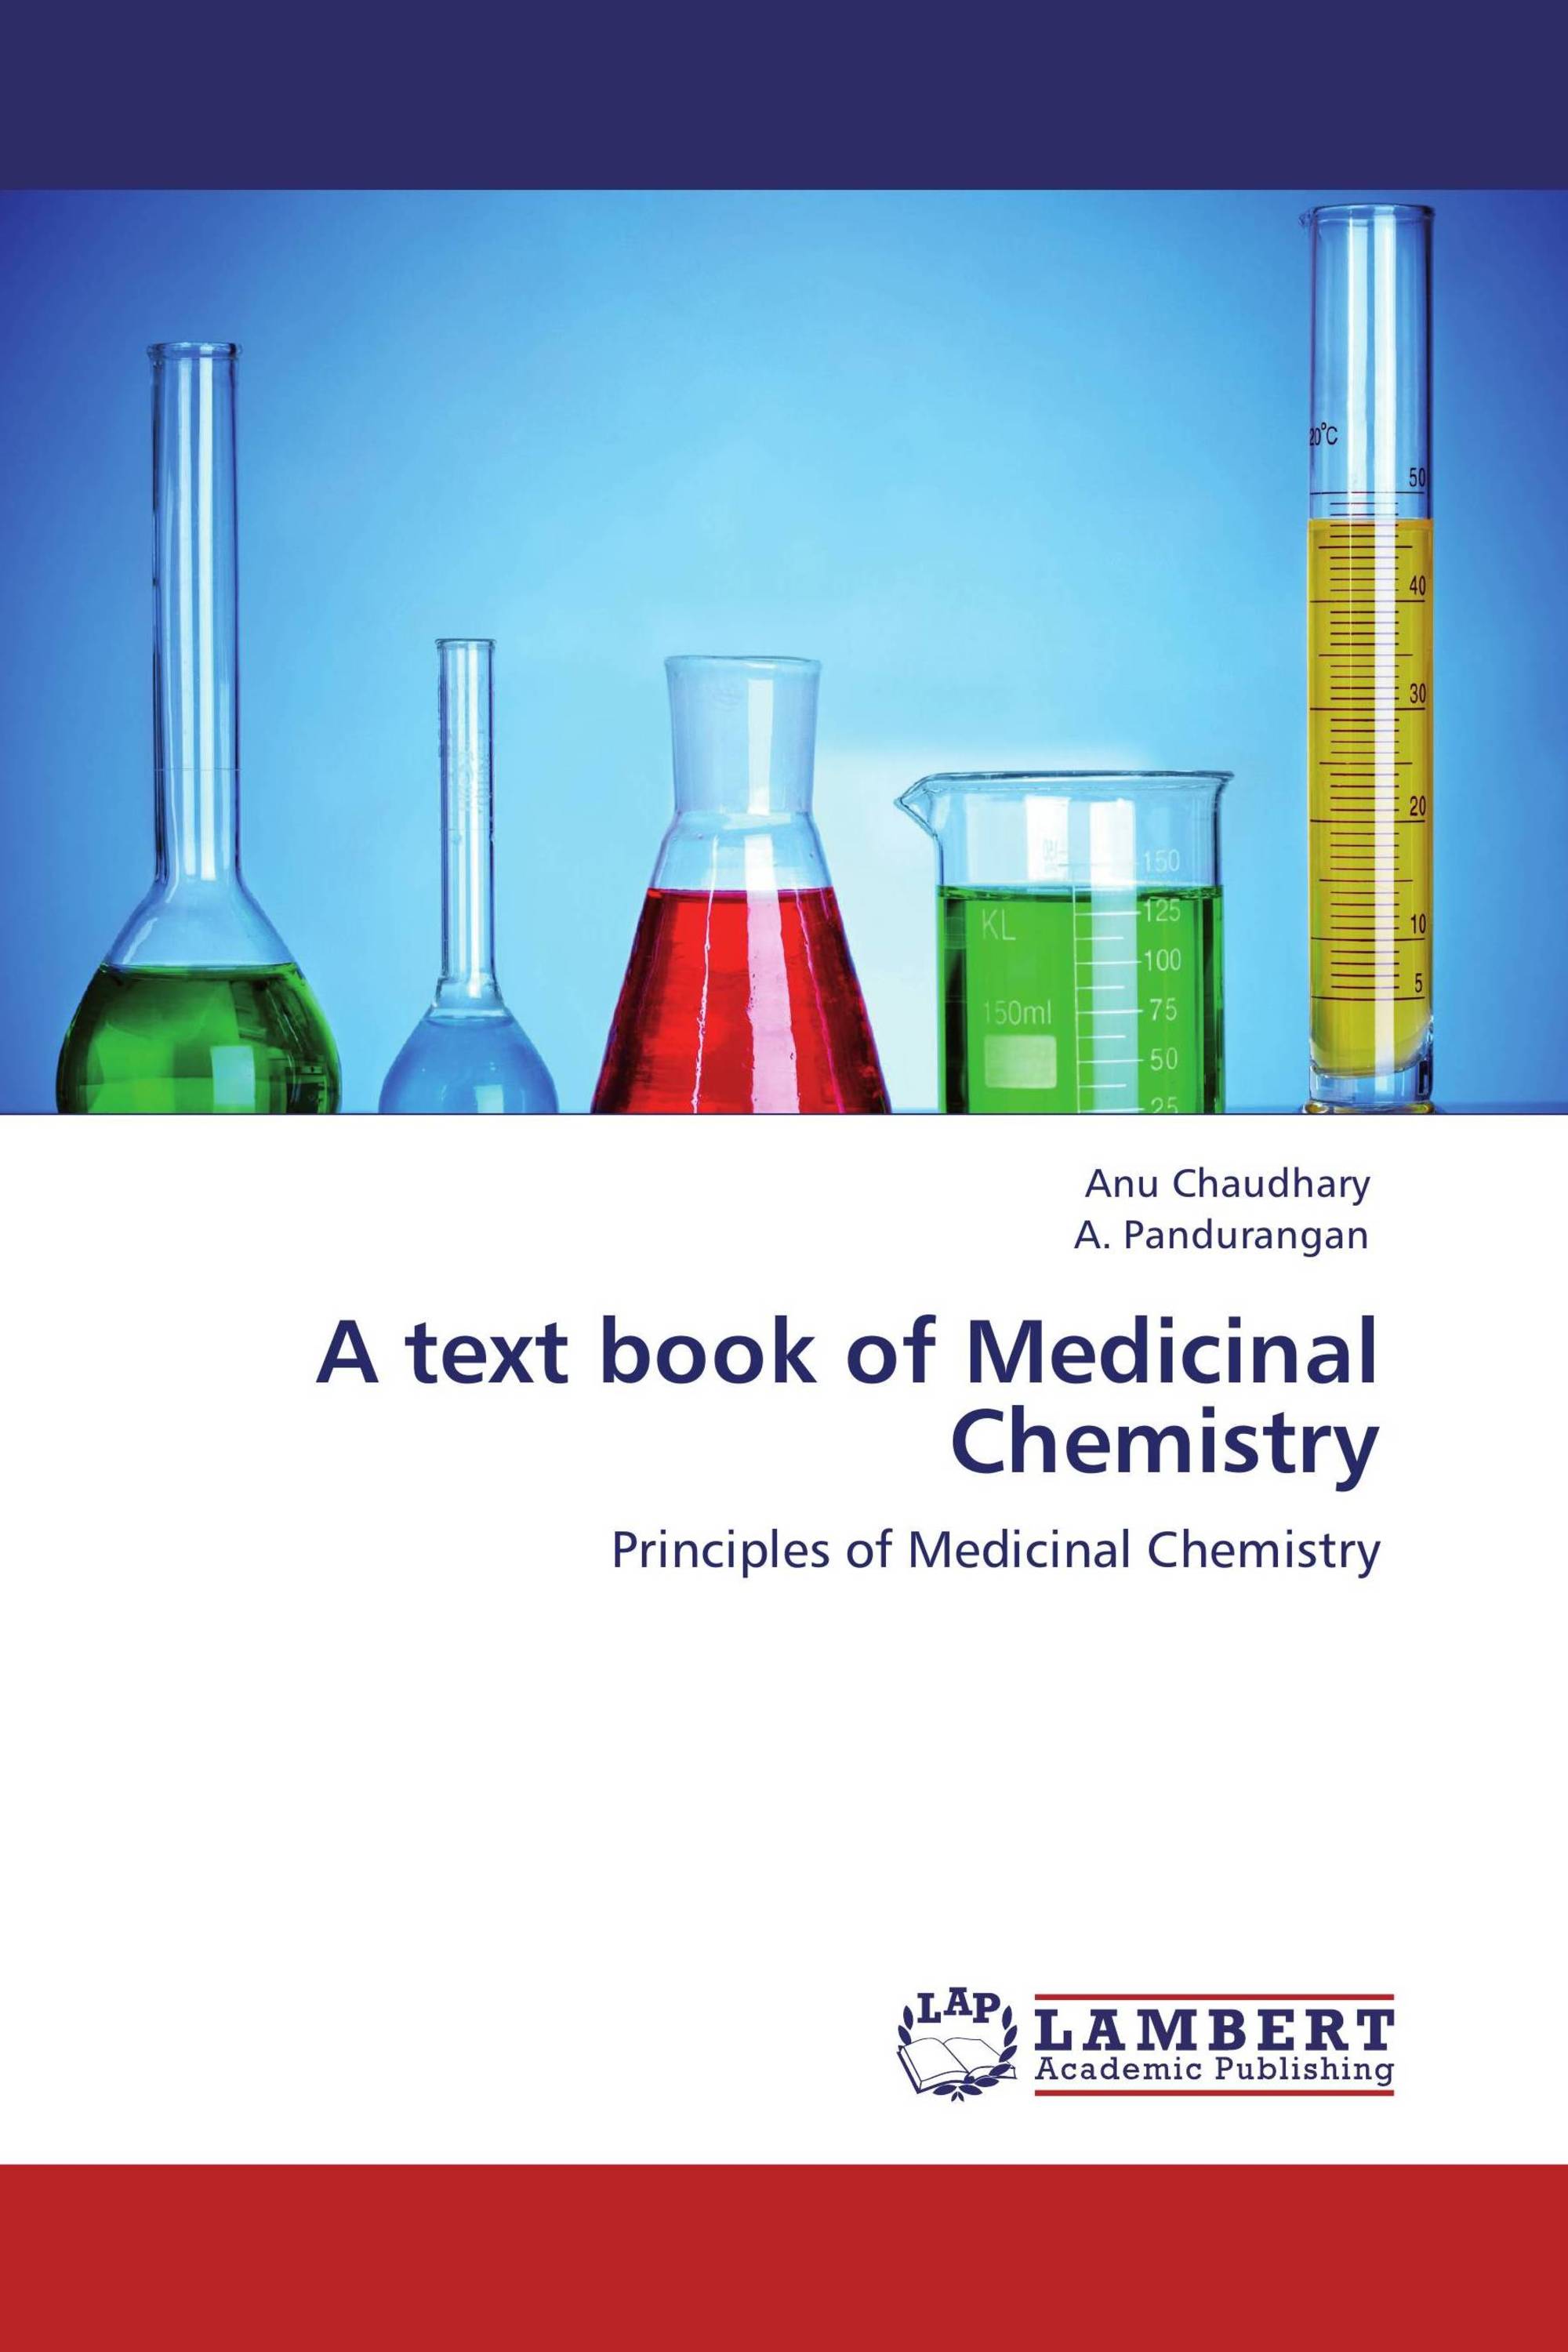 medicinal chemistry dissertation topics